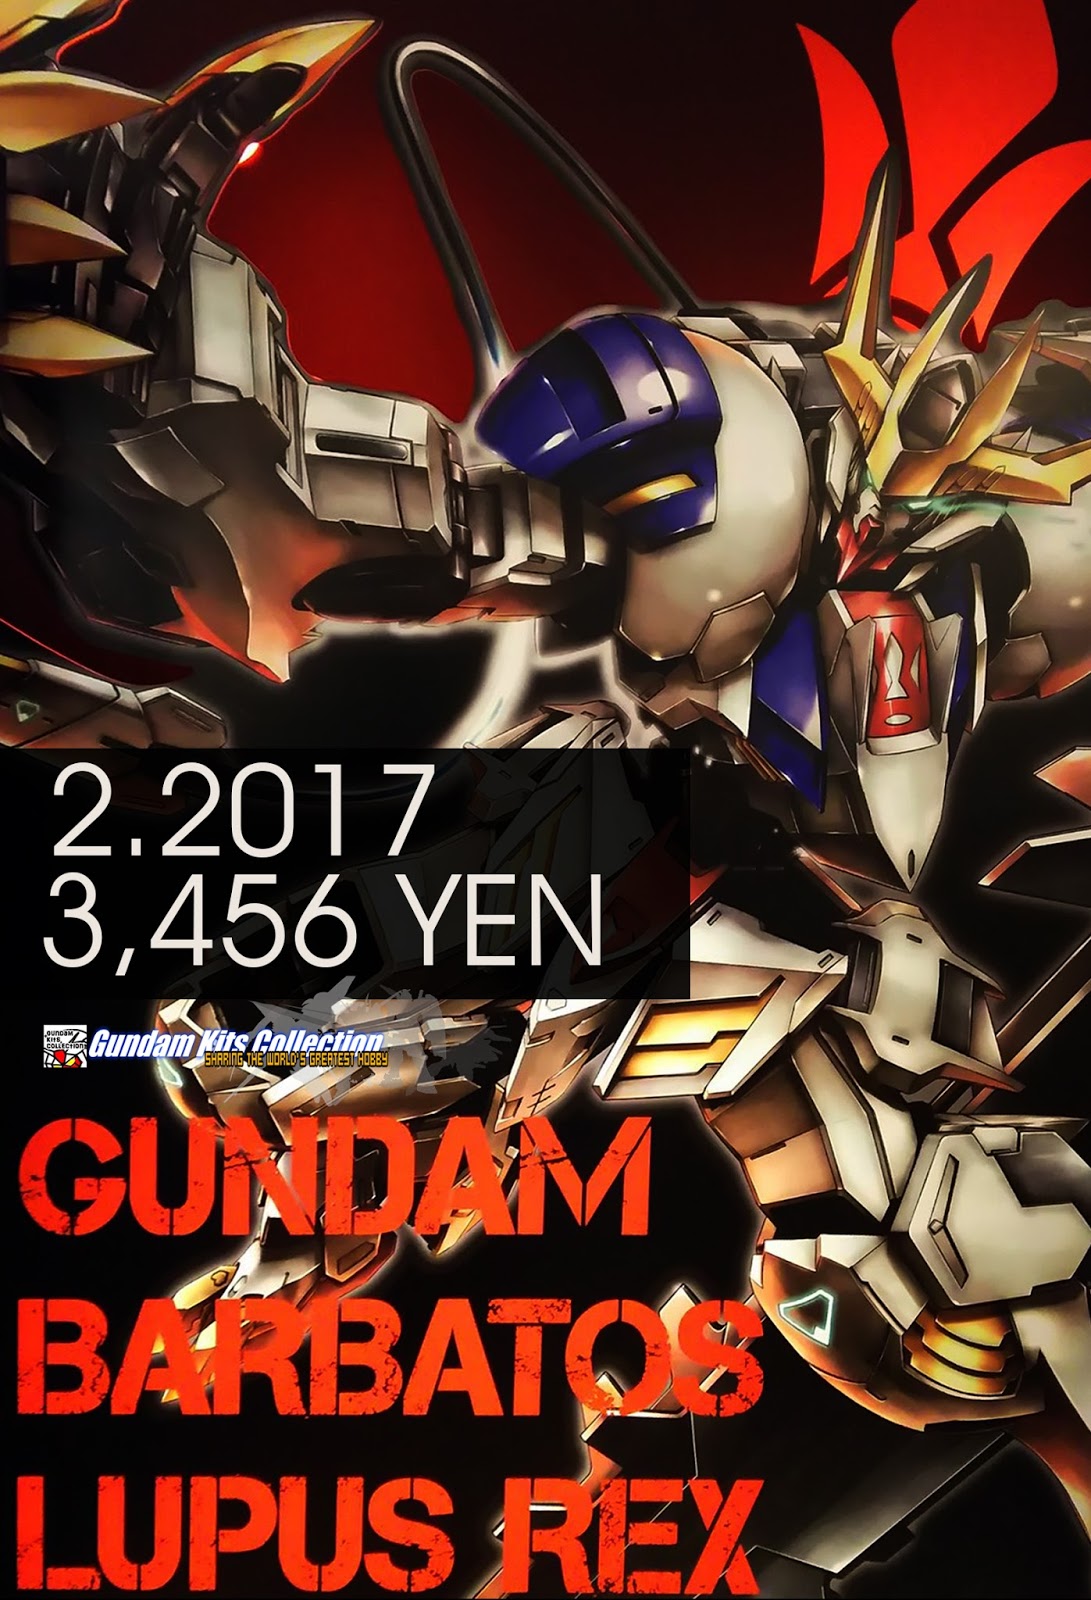 1/100 Full Mechanics Gundam Barbatos Lupus Rex - Release Info